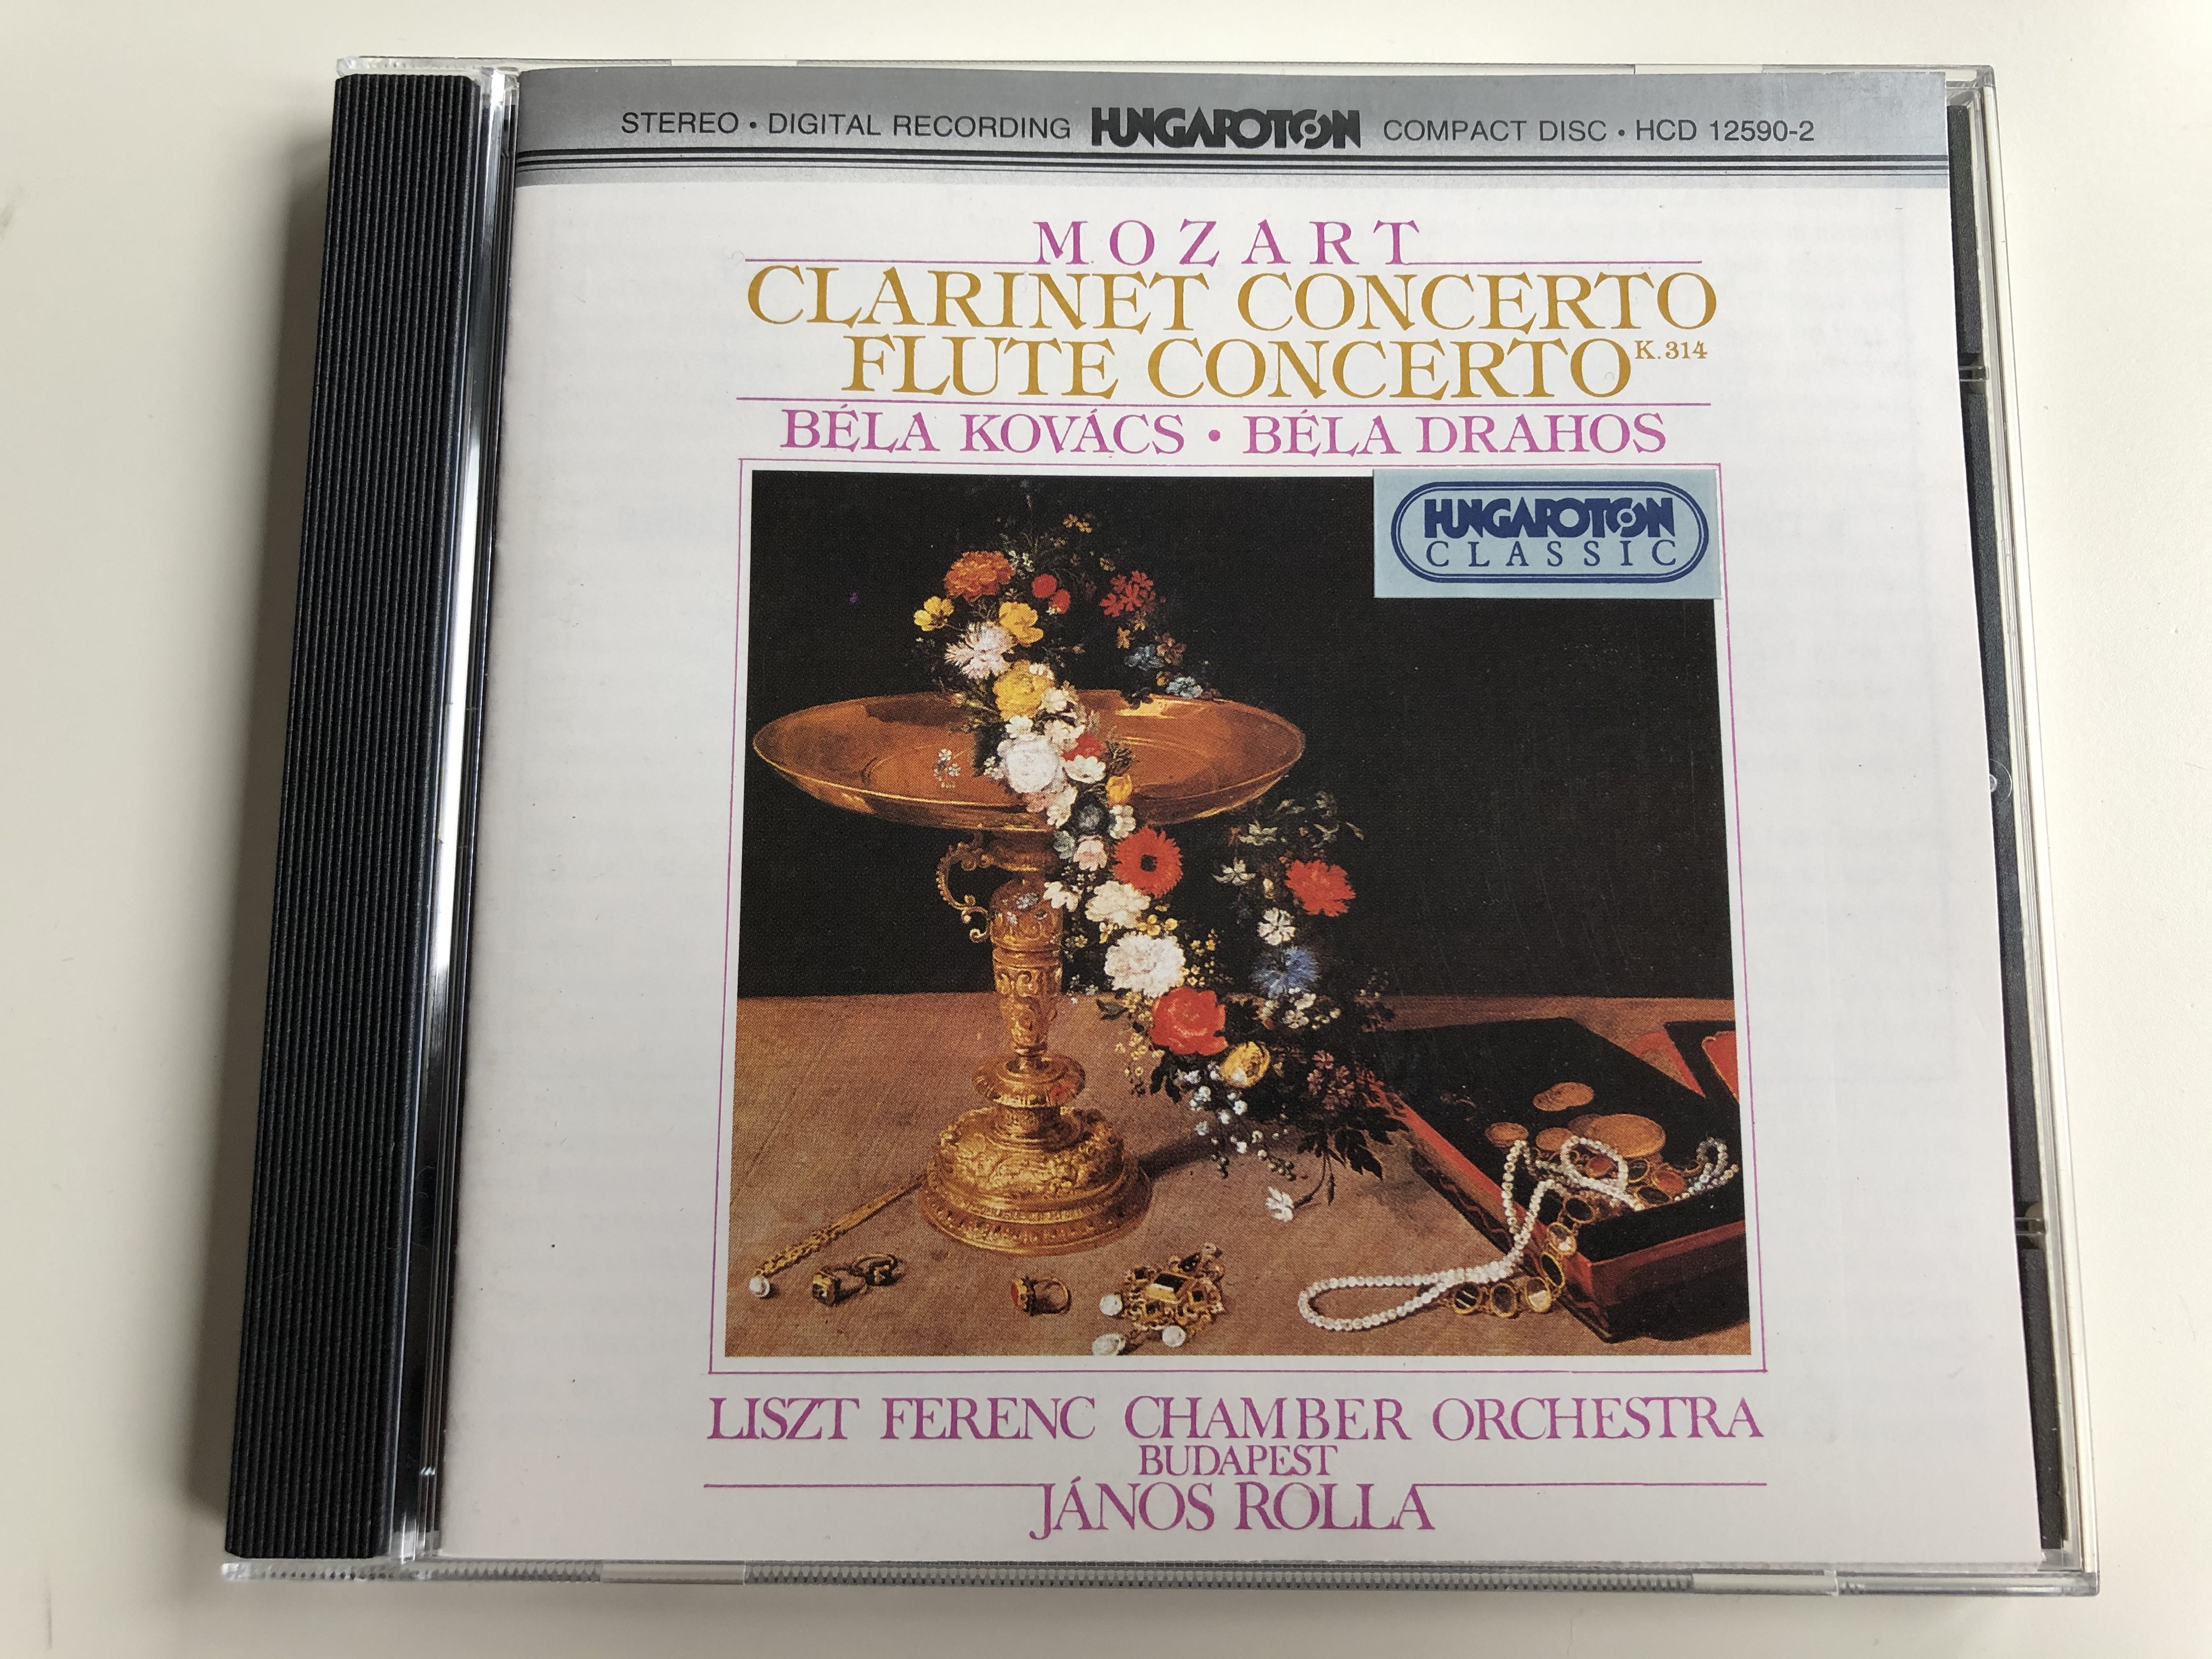 mozart-clarinet-concert-flute-concerto-k-314-b-la-kov-cs-b-la-drahos-liszt-ferenc-chamber-orchestra-j-nos-rolla-hungaroton-audio-cd-1995-stereo-hcd-12590-2-1-.jpg